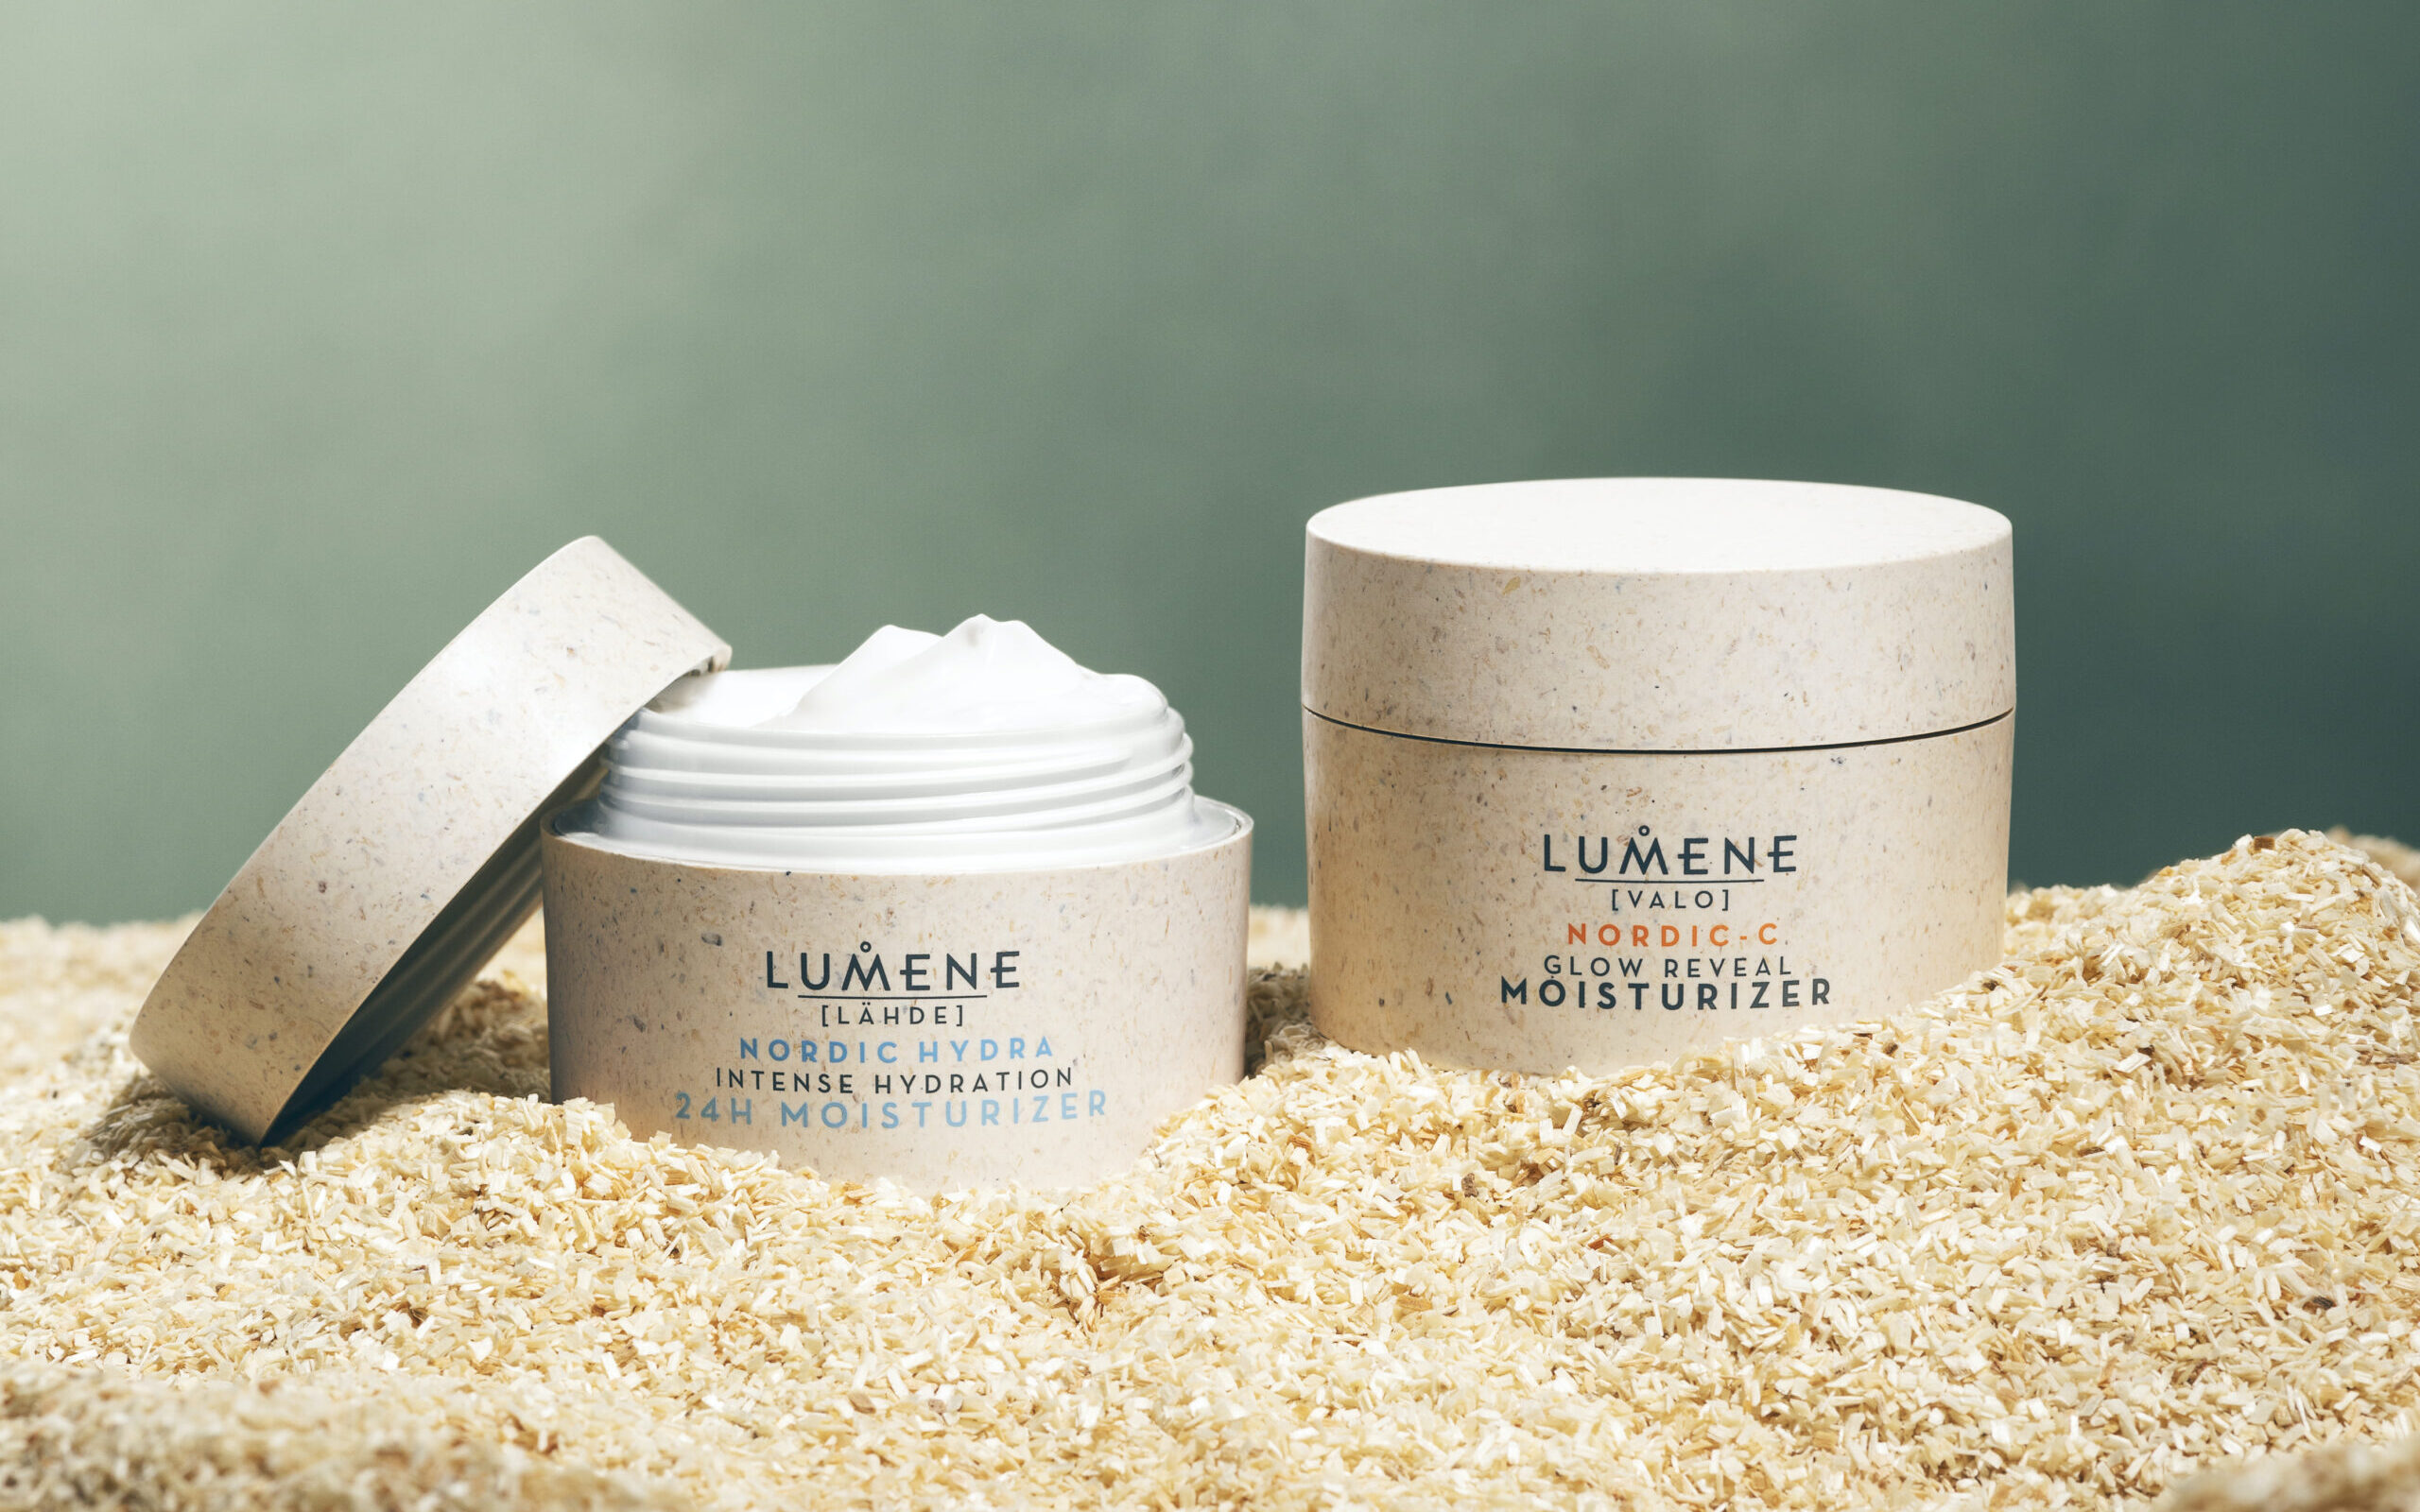 Sulapac packaging by Finnish cosmetic brand Lumene